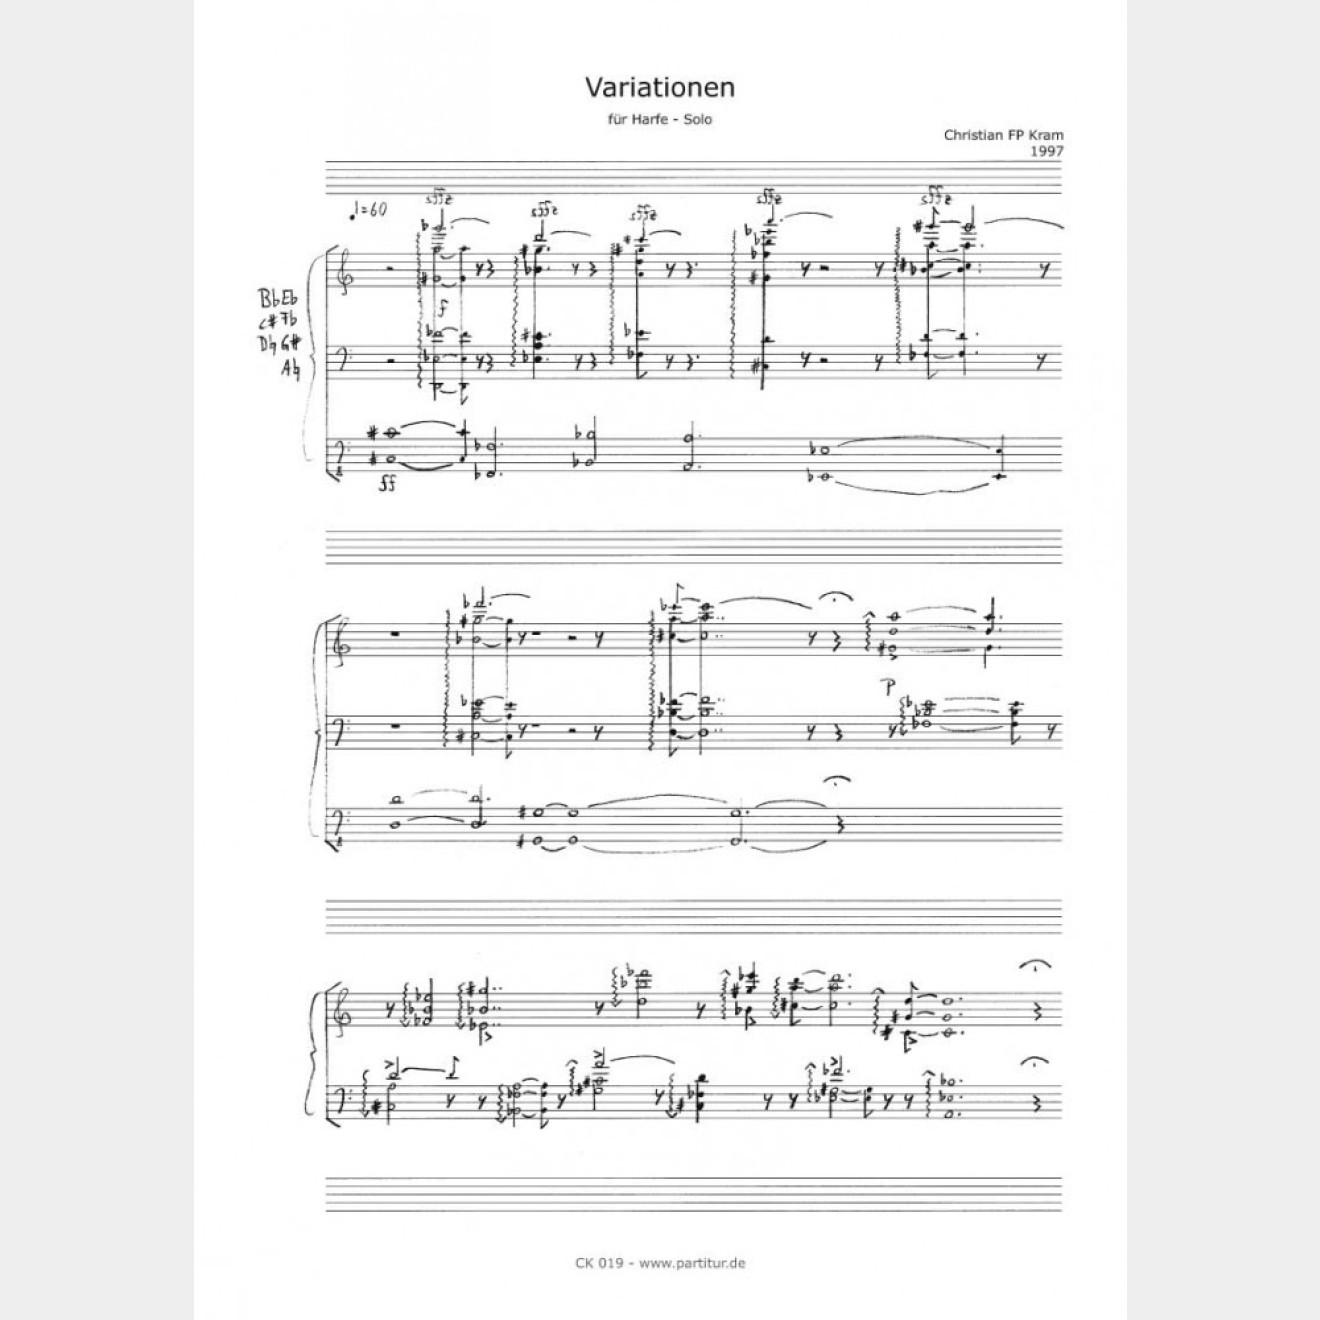 Variations for harp, 16`